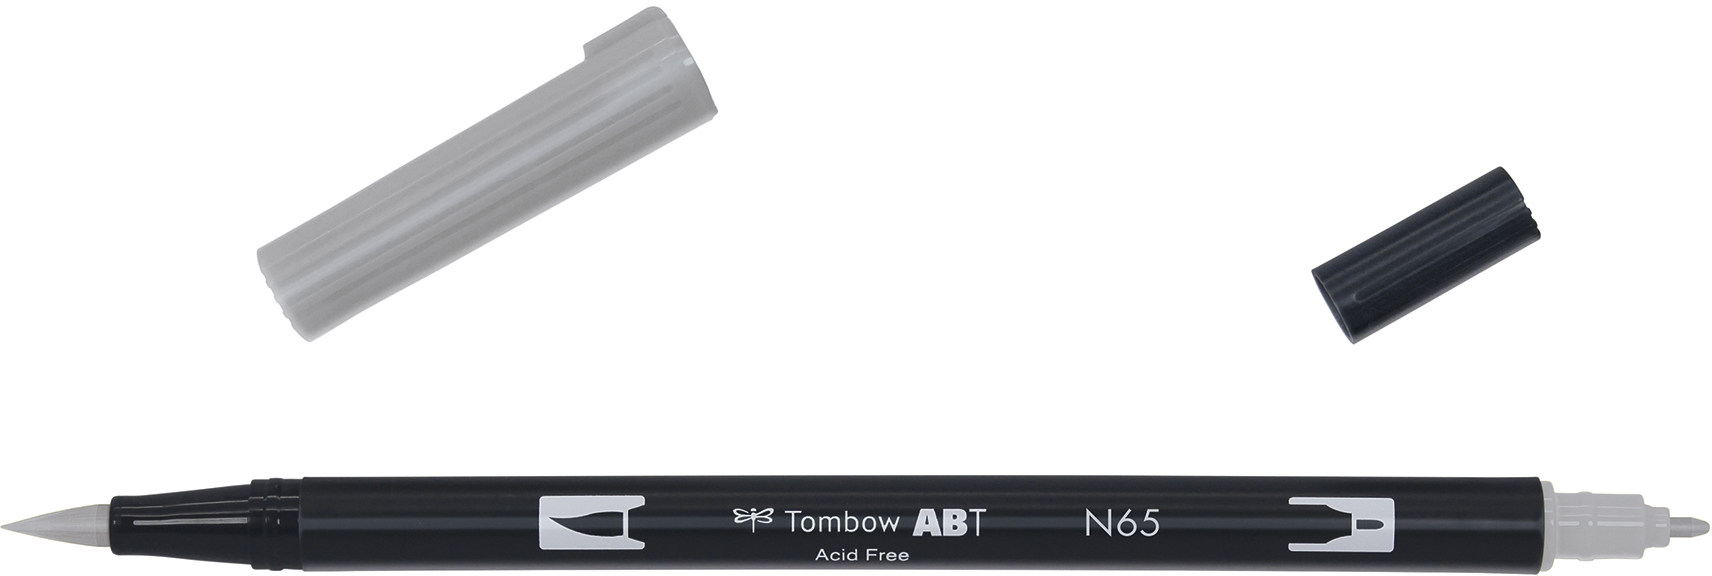 TOMBOW Dual Brush Pen ABT N65 cool grey 5